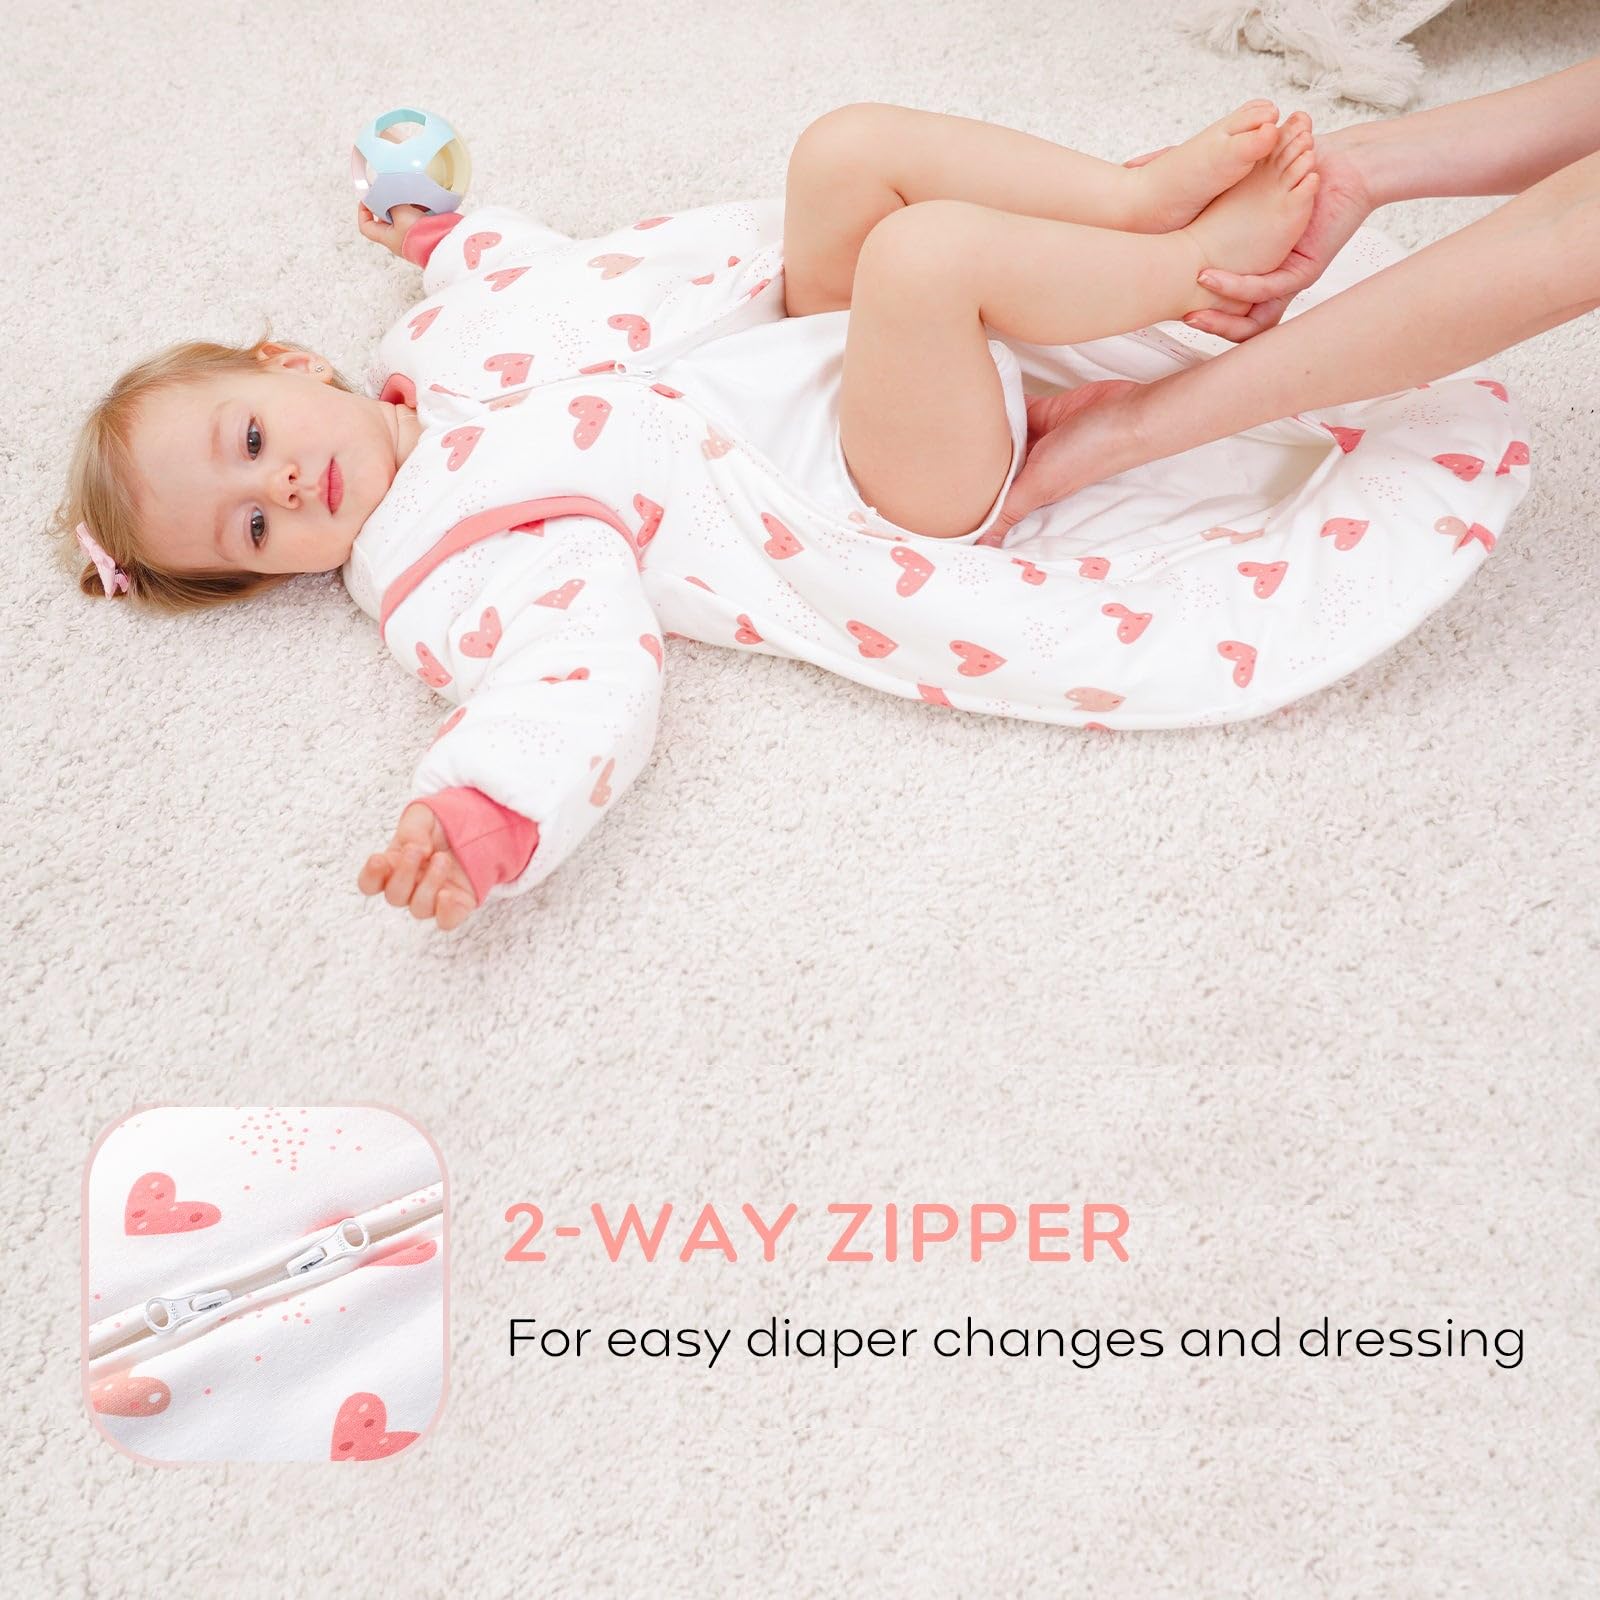 Yoofoss Baby Sleep Sack, Winter TOG 3.0 with 2-Way Zipper, 100% Cotton Fabric Winter Newborn Sleeping Sack